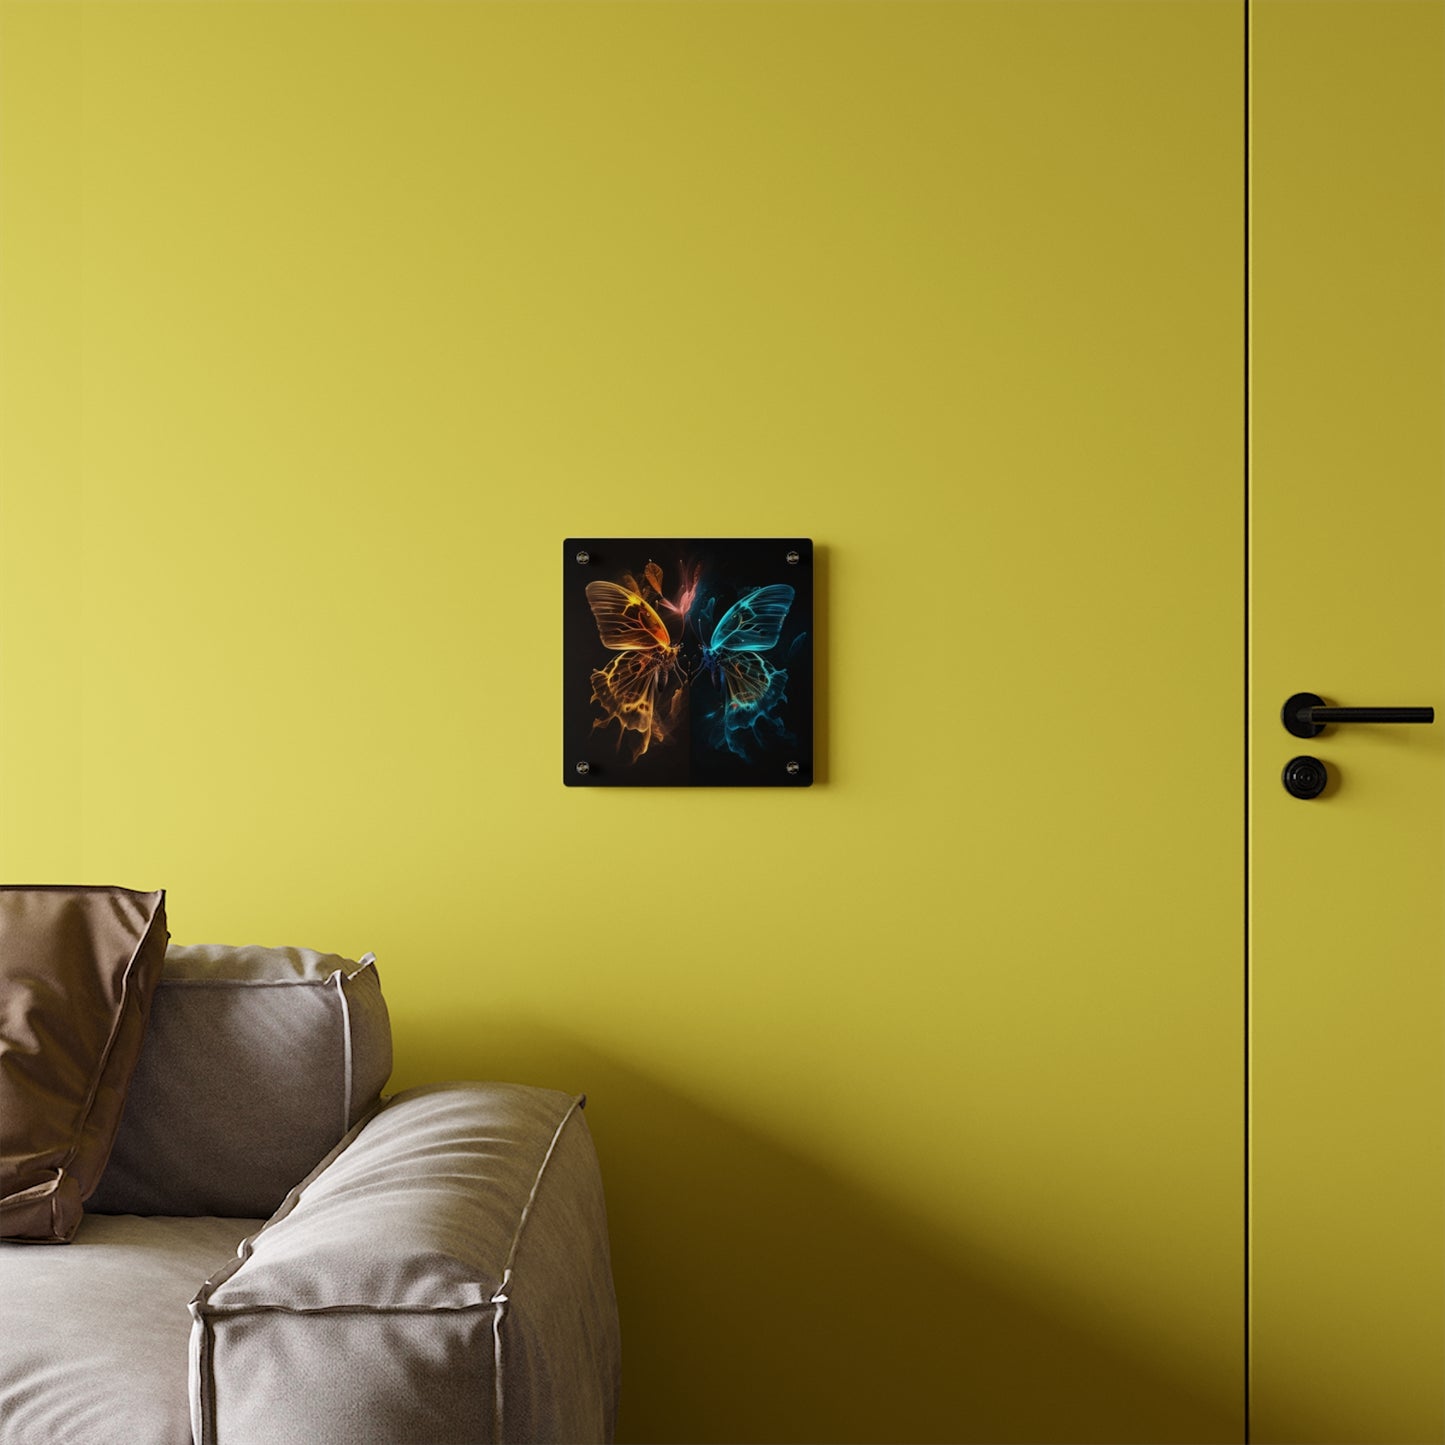 Acrylic Wall Art Panels Kiss Neon Butterfly 4